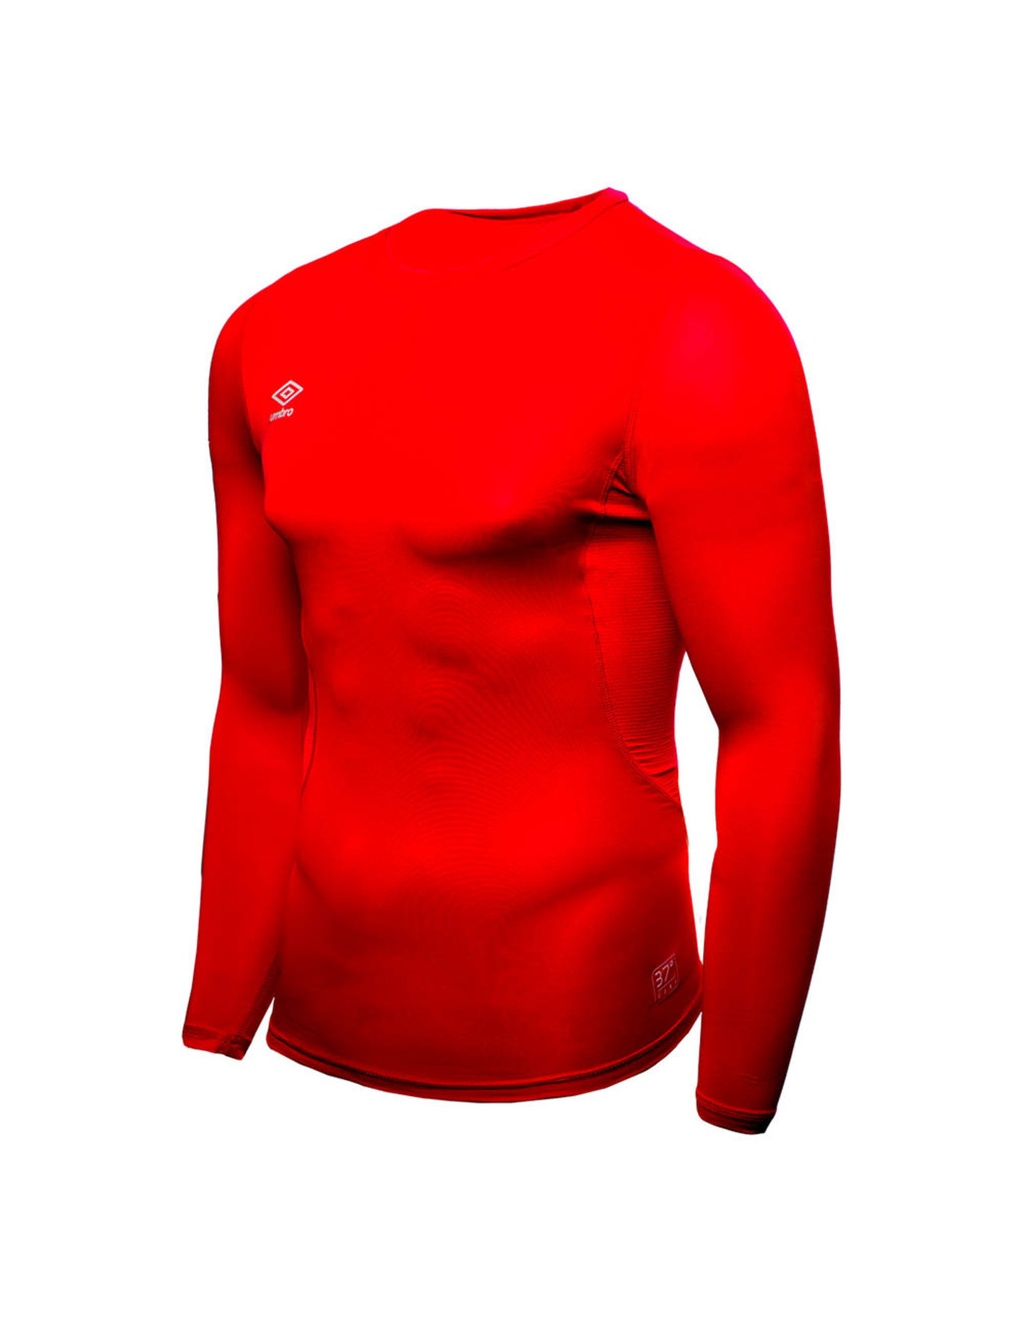 Matrona personal Ficticio camiseta-termica-manga-larga-core-crew-roja-64702u-7ra